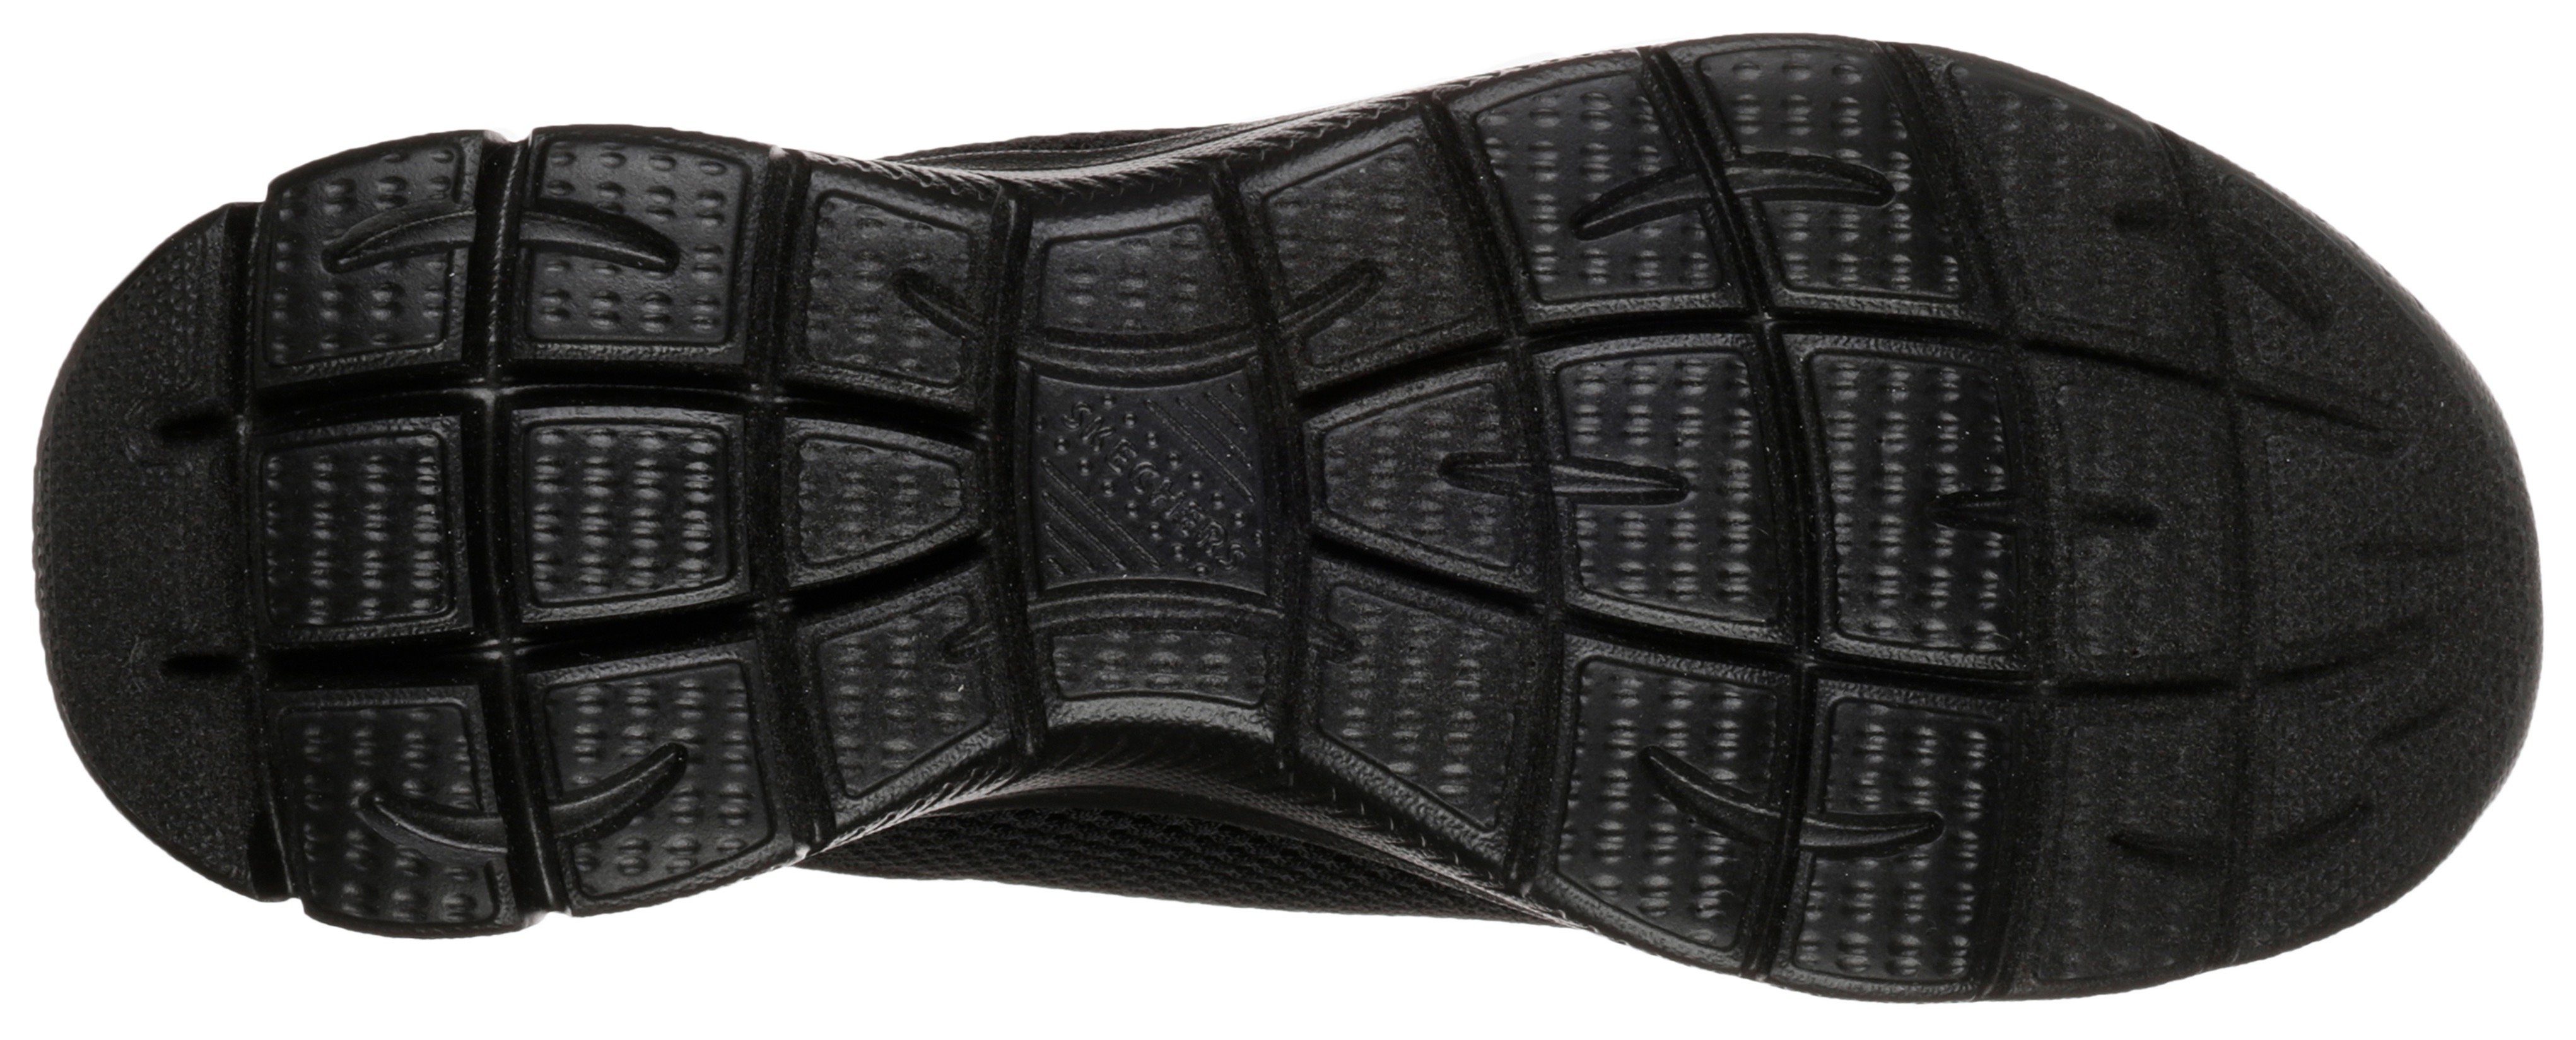 komfortabler mit Slip-On schwarz Innensohle Skechers Sneaker SUMMITS